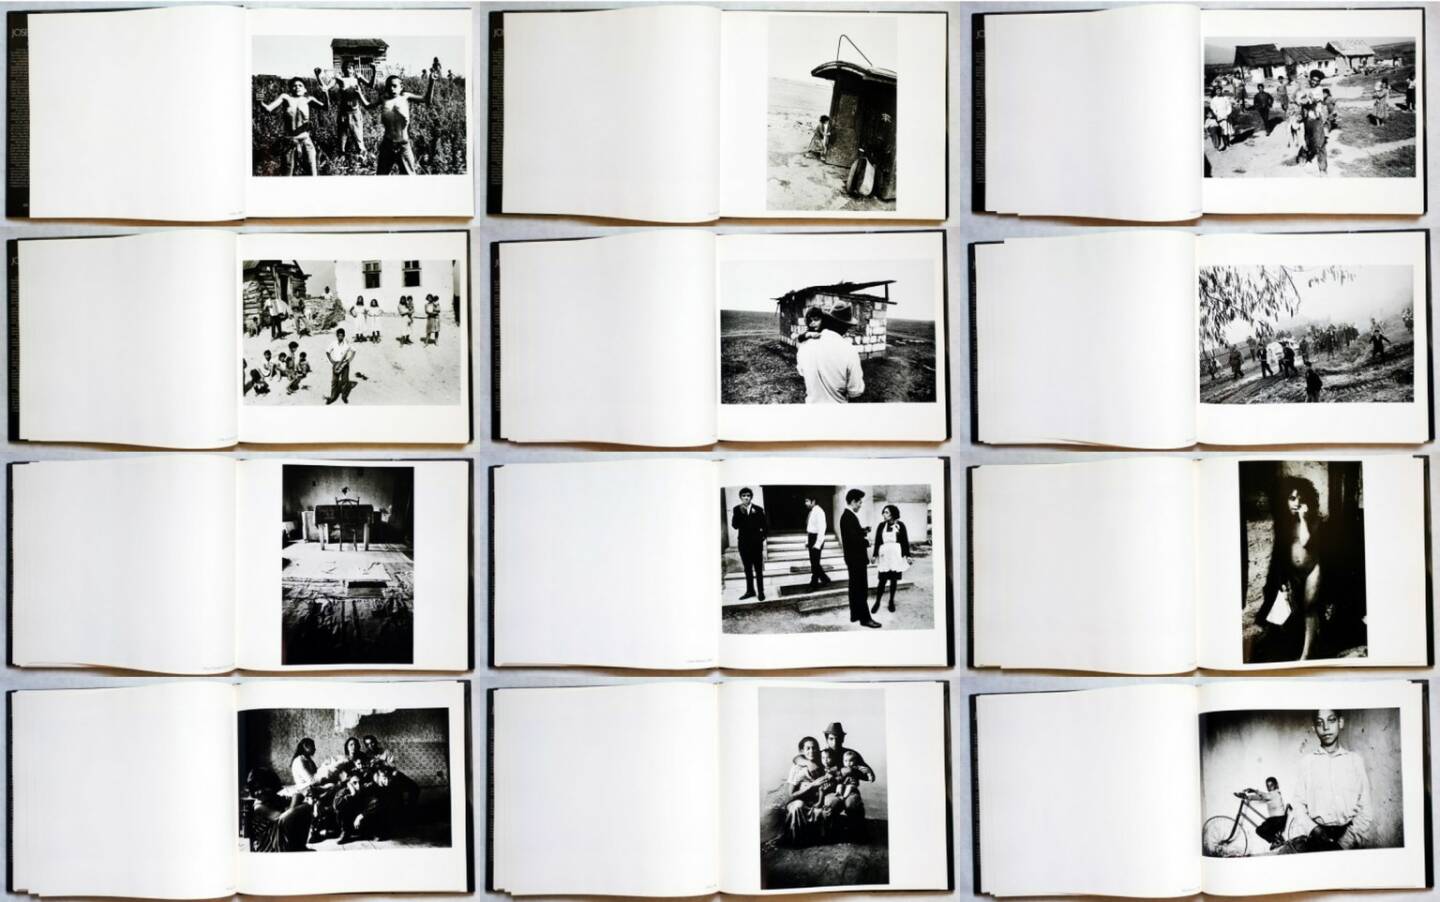 Josef Koudelka - Gypsies, Aperture, 1975, Beispielseiten, sample spreads - http://josefchladek.com/book/josef_koudelka_-_gypsies